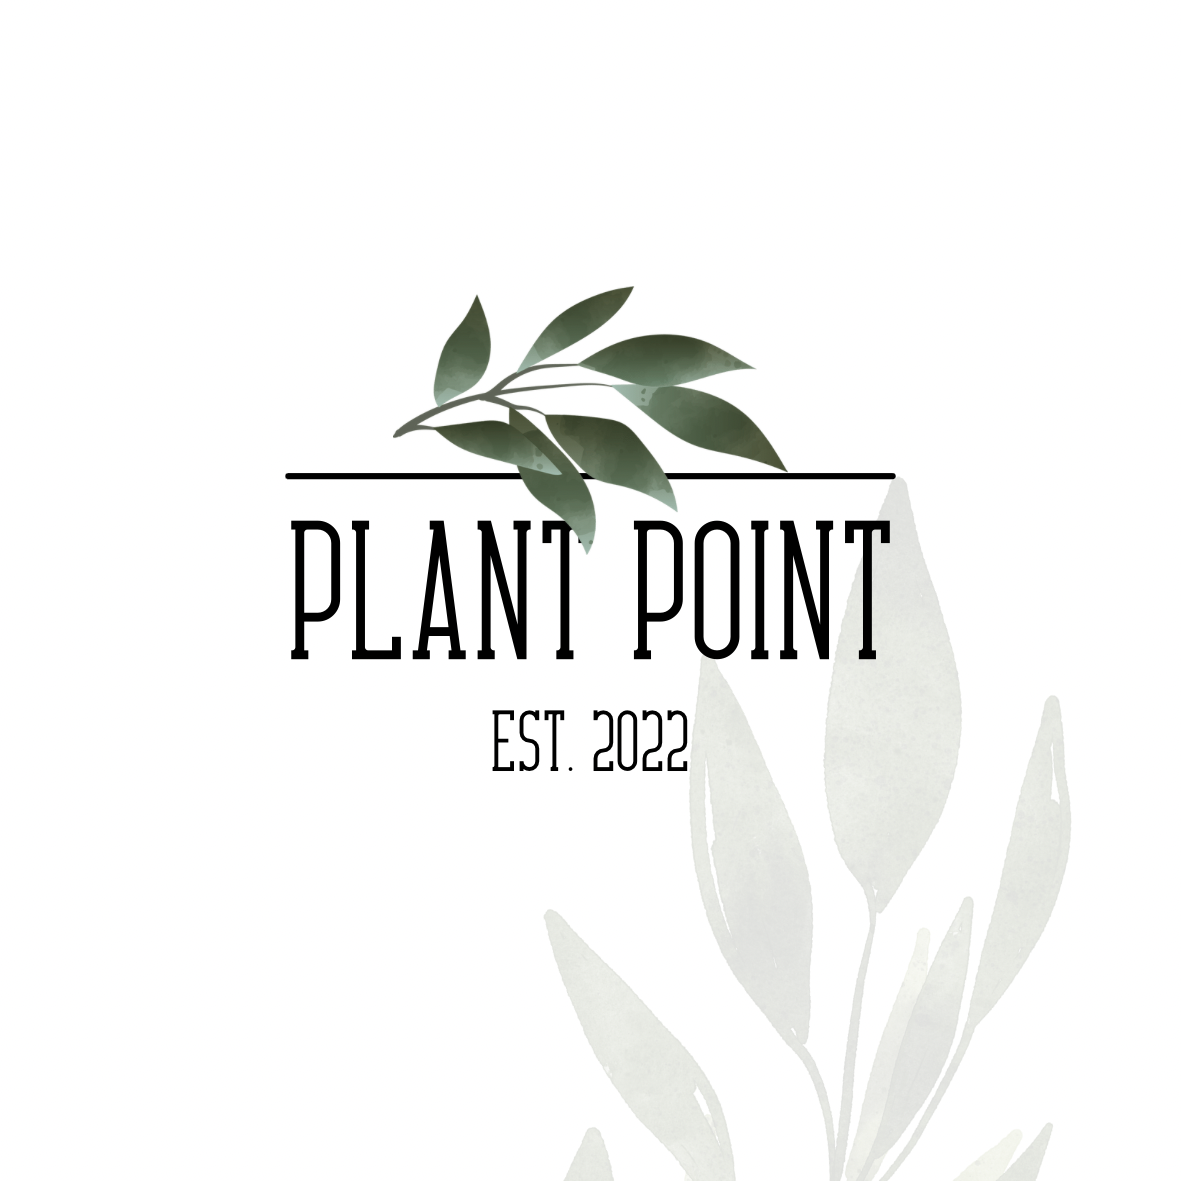 PLANT POINT